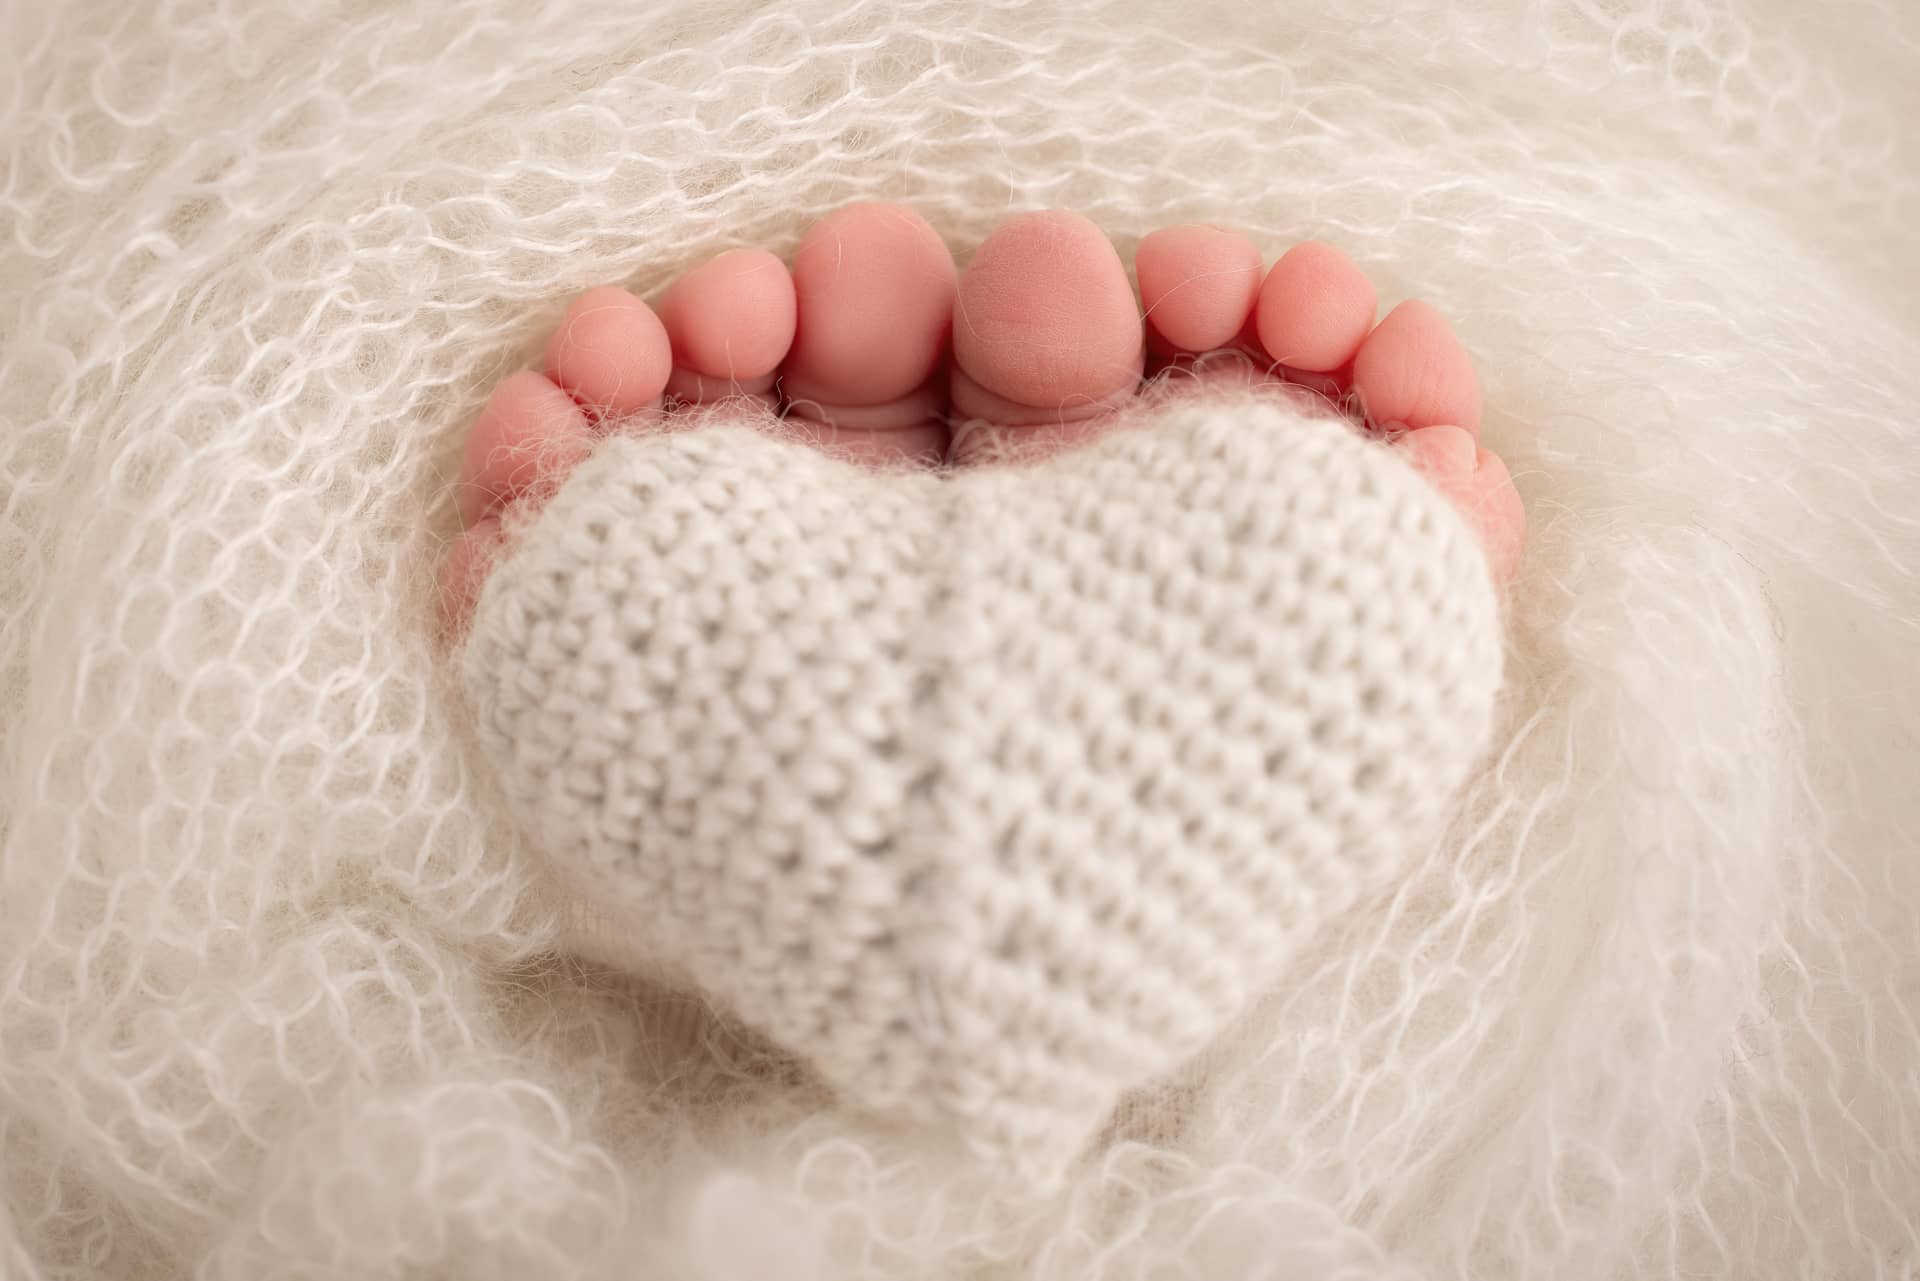 Heels feet newborn knitted heart legs baby macro studio photography